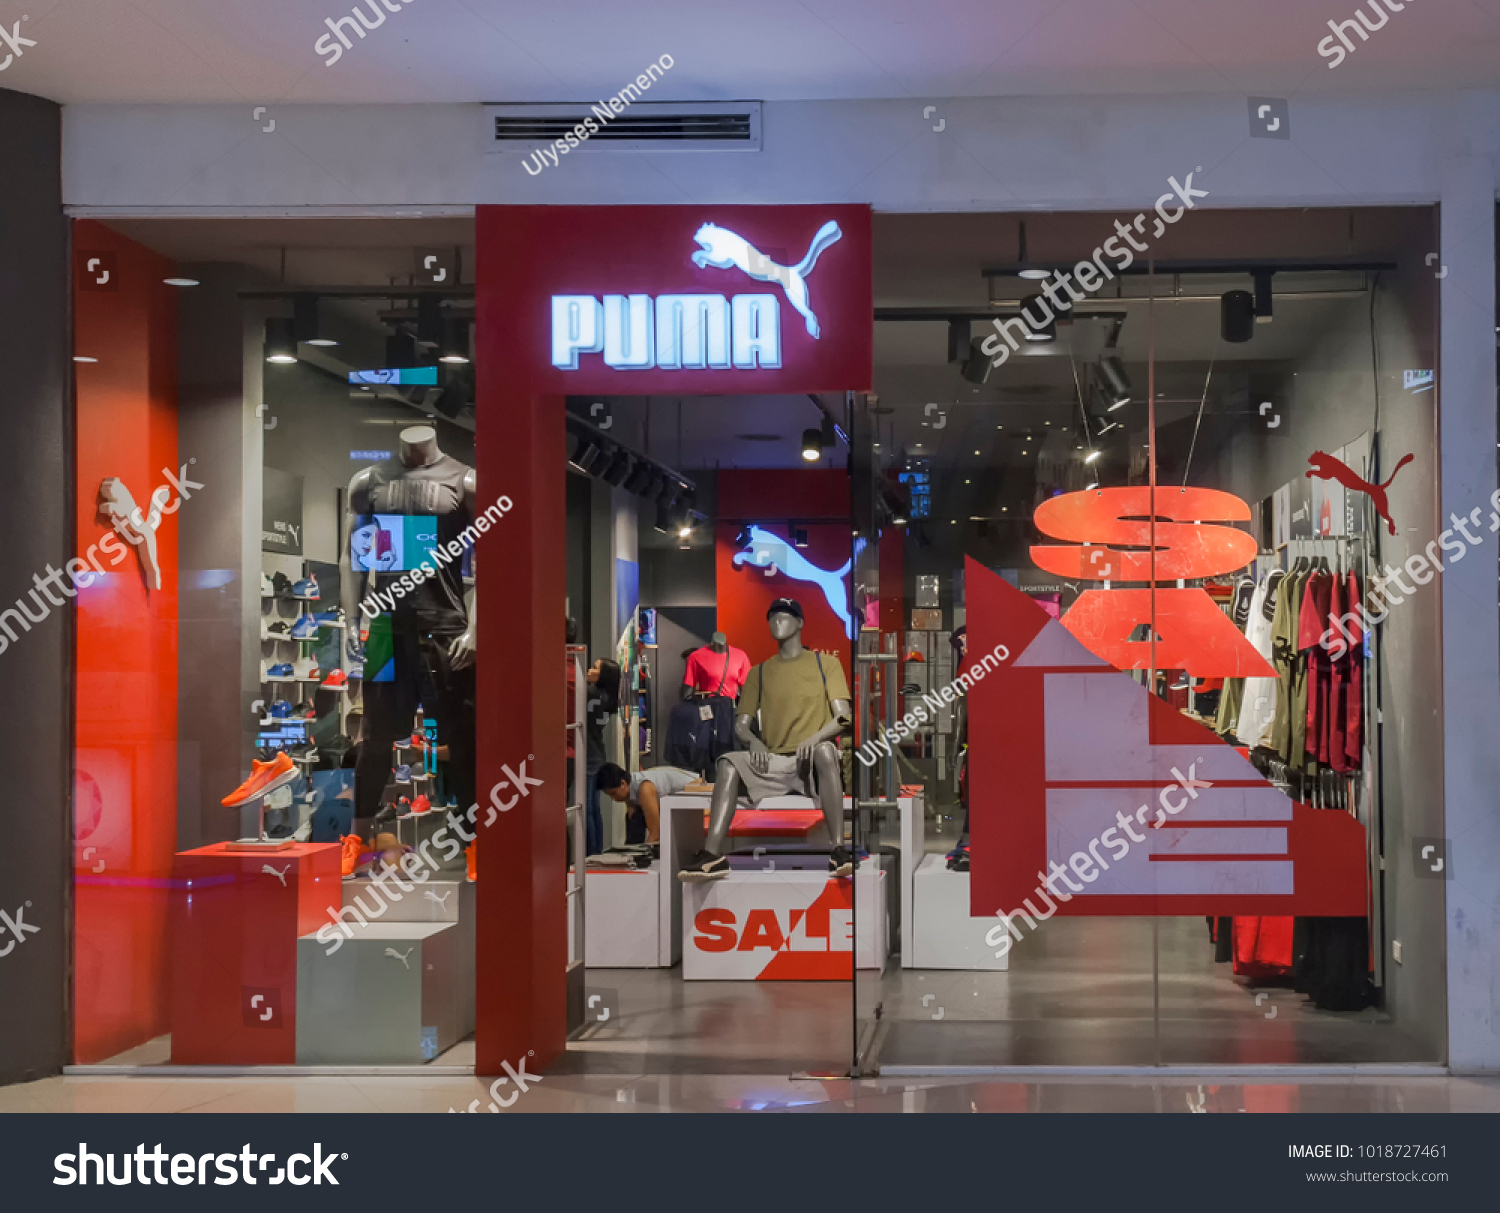 puma shop philippines